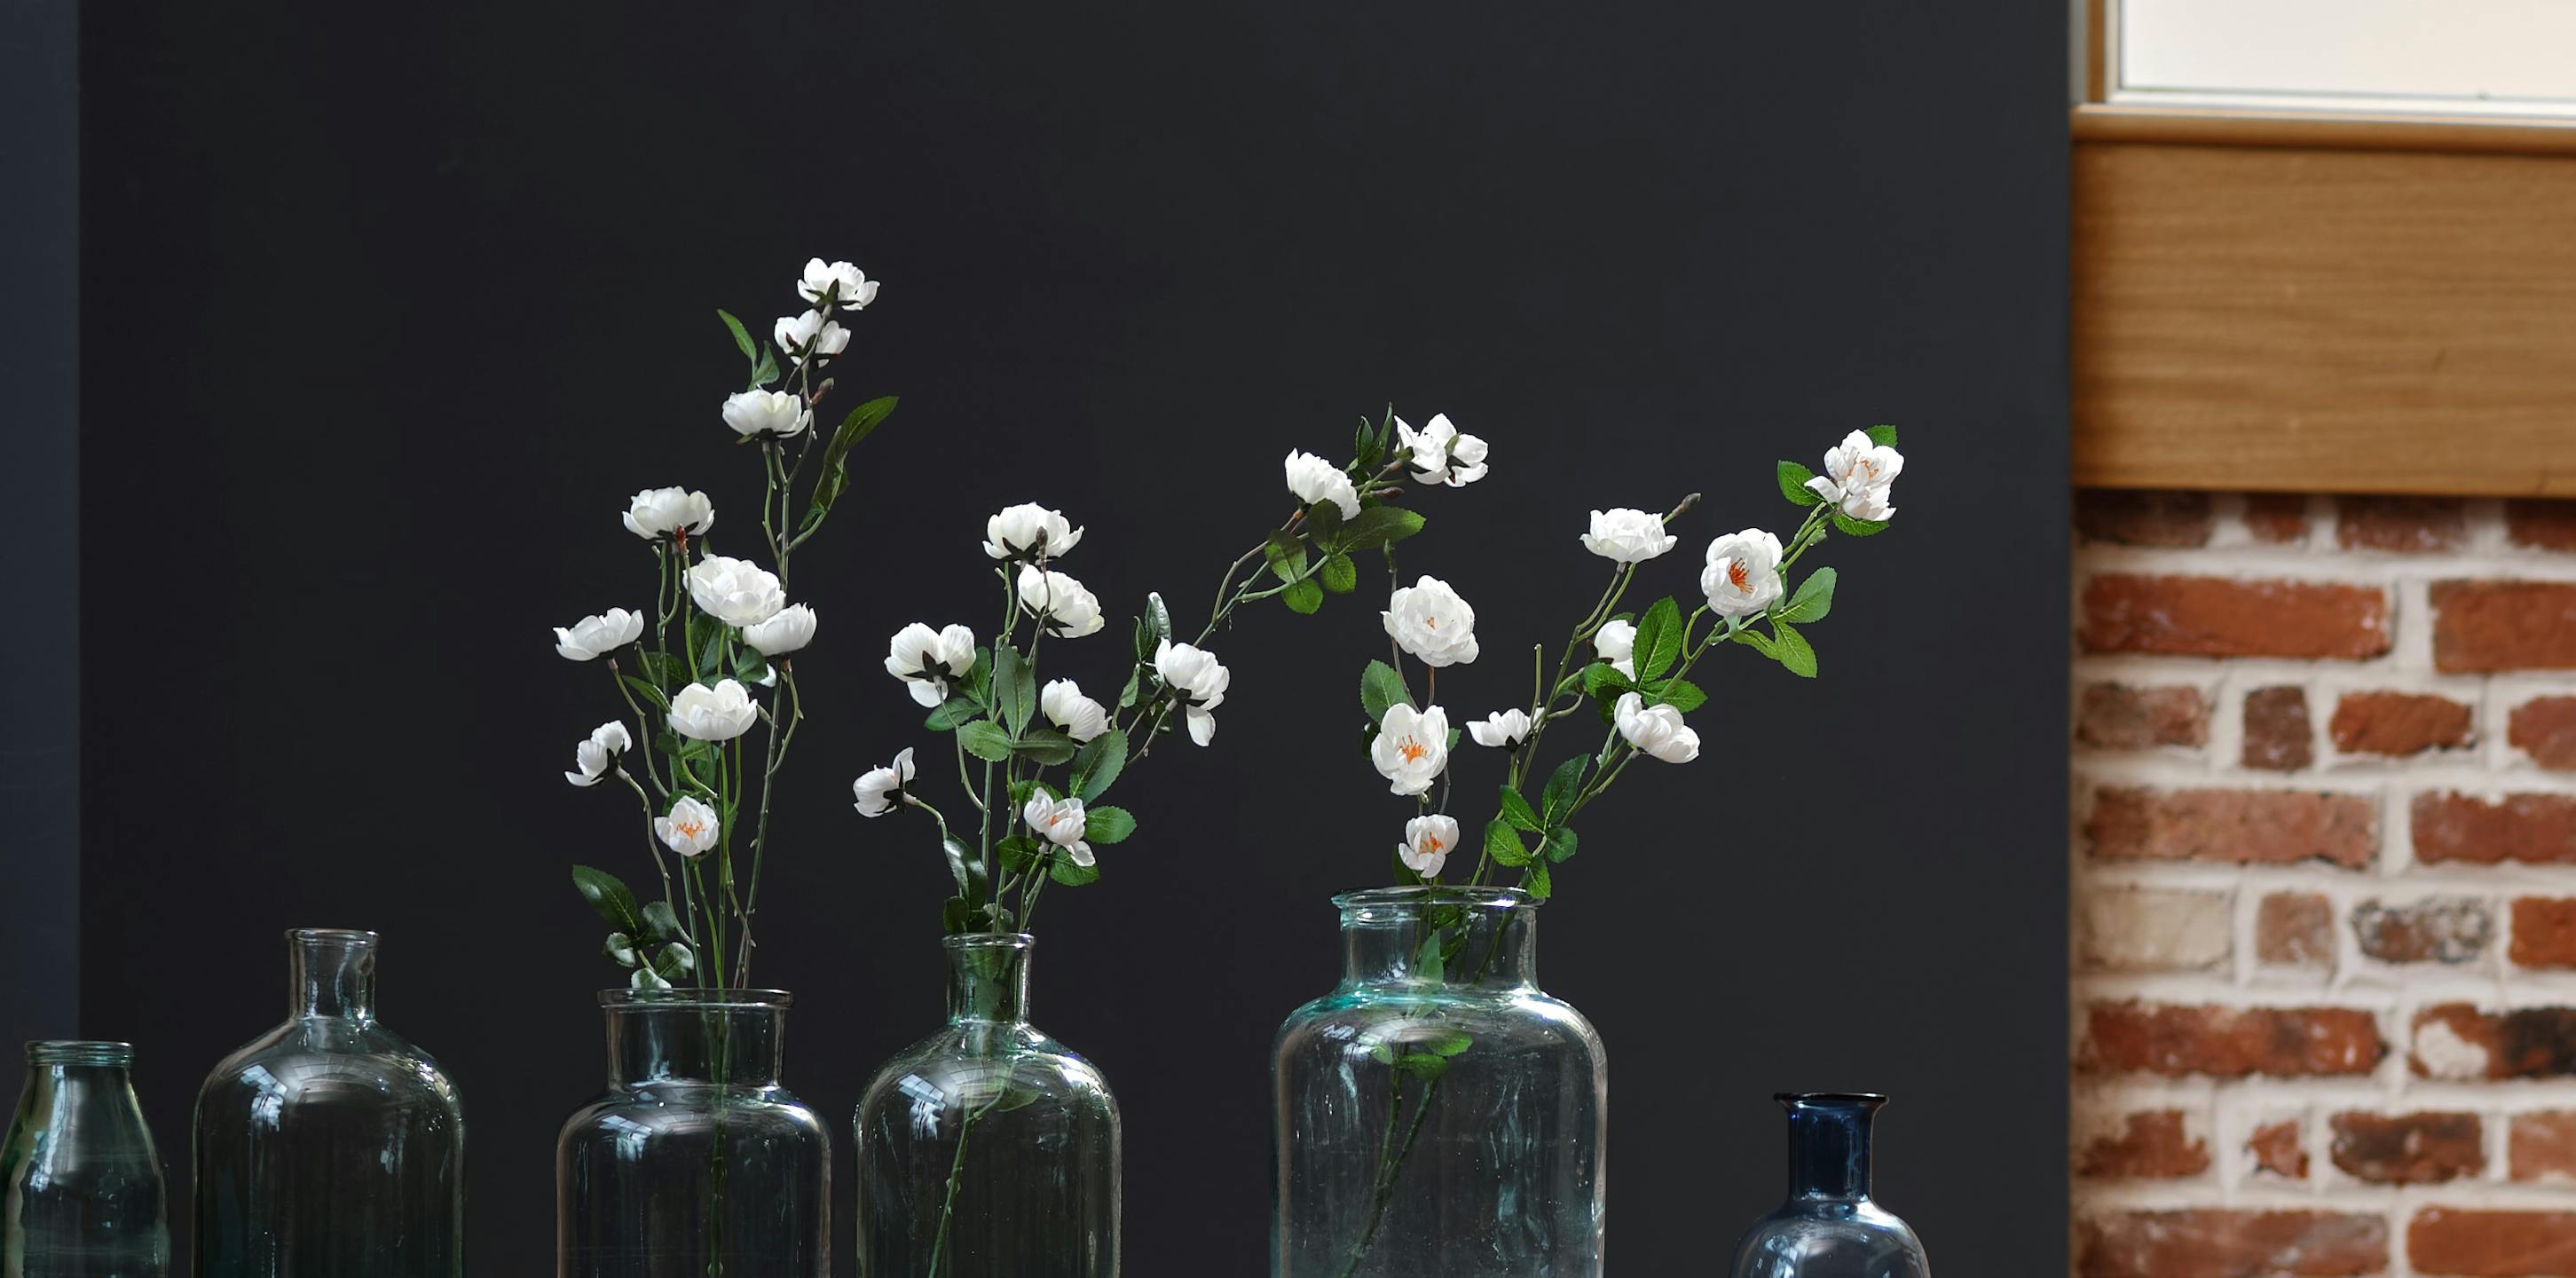 Artificial white blossom stems in glass bottles